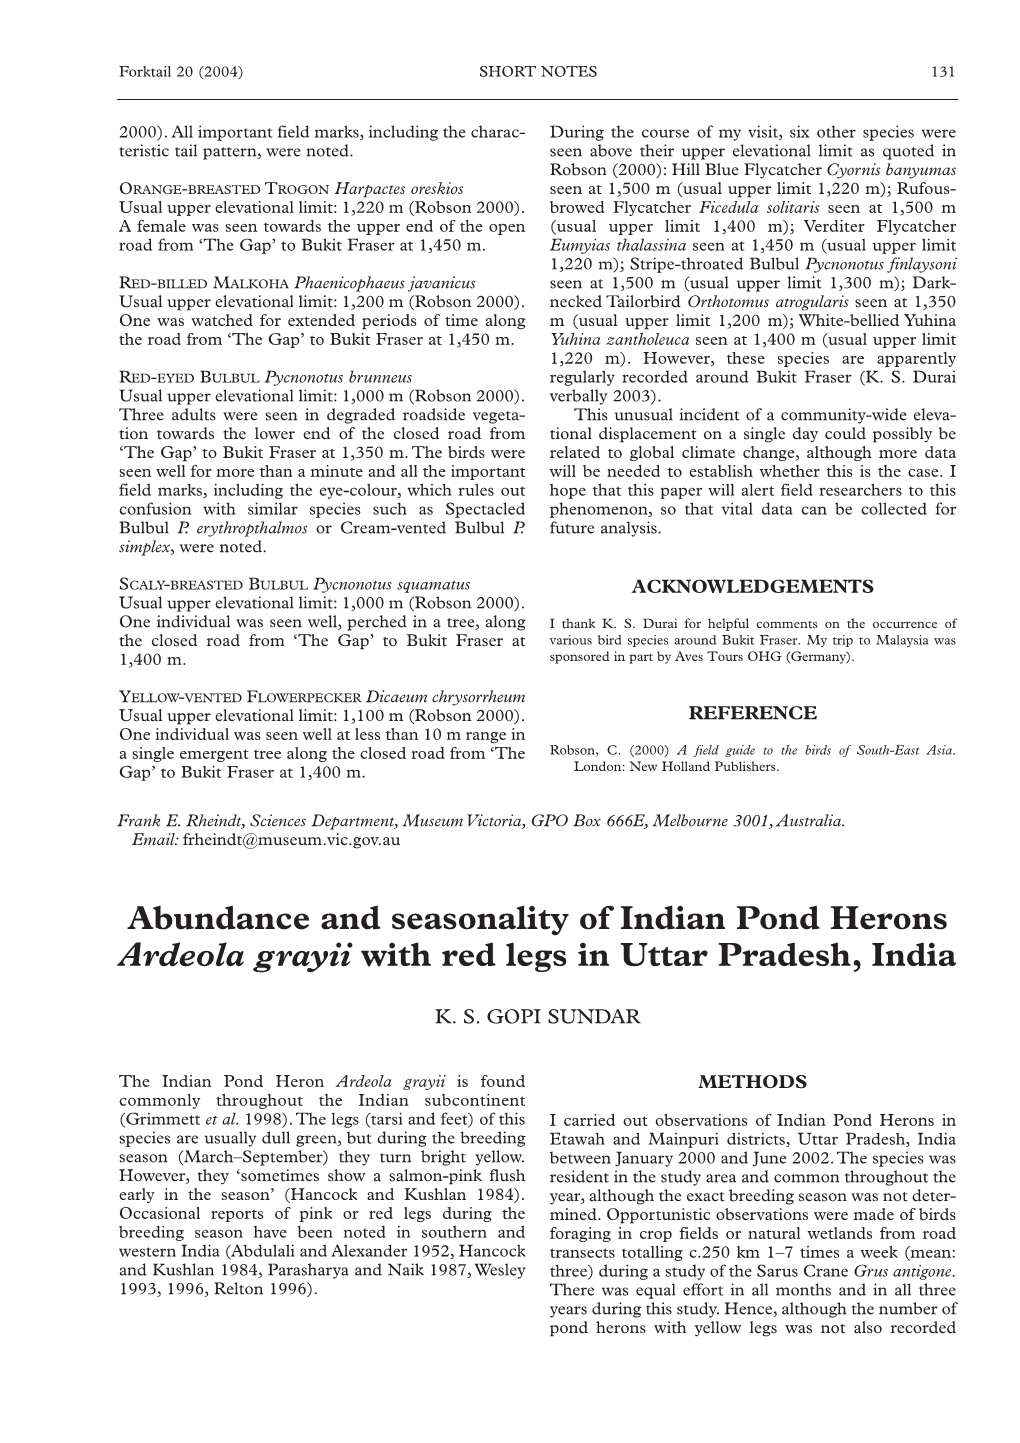 Abundance and Seasonality of Indian Pond Herons Ardeola Grayii with Red Legs in Uttar Pradesh, India